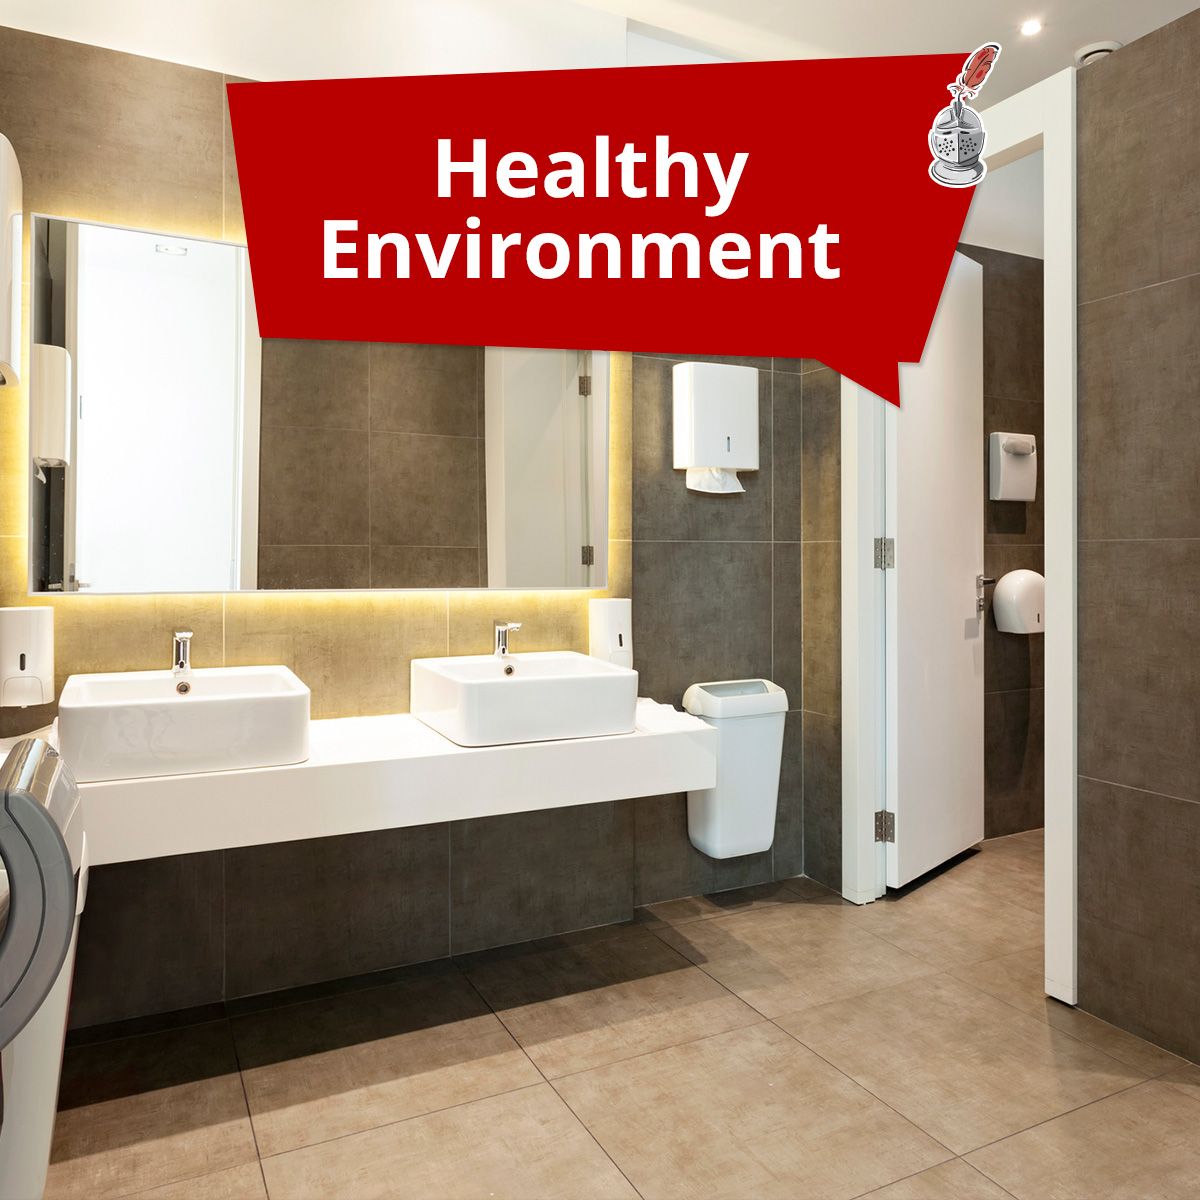 Healthy Environment